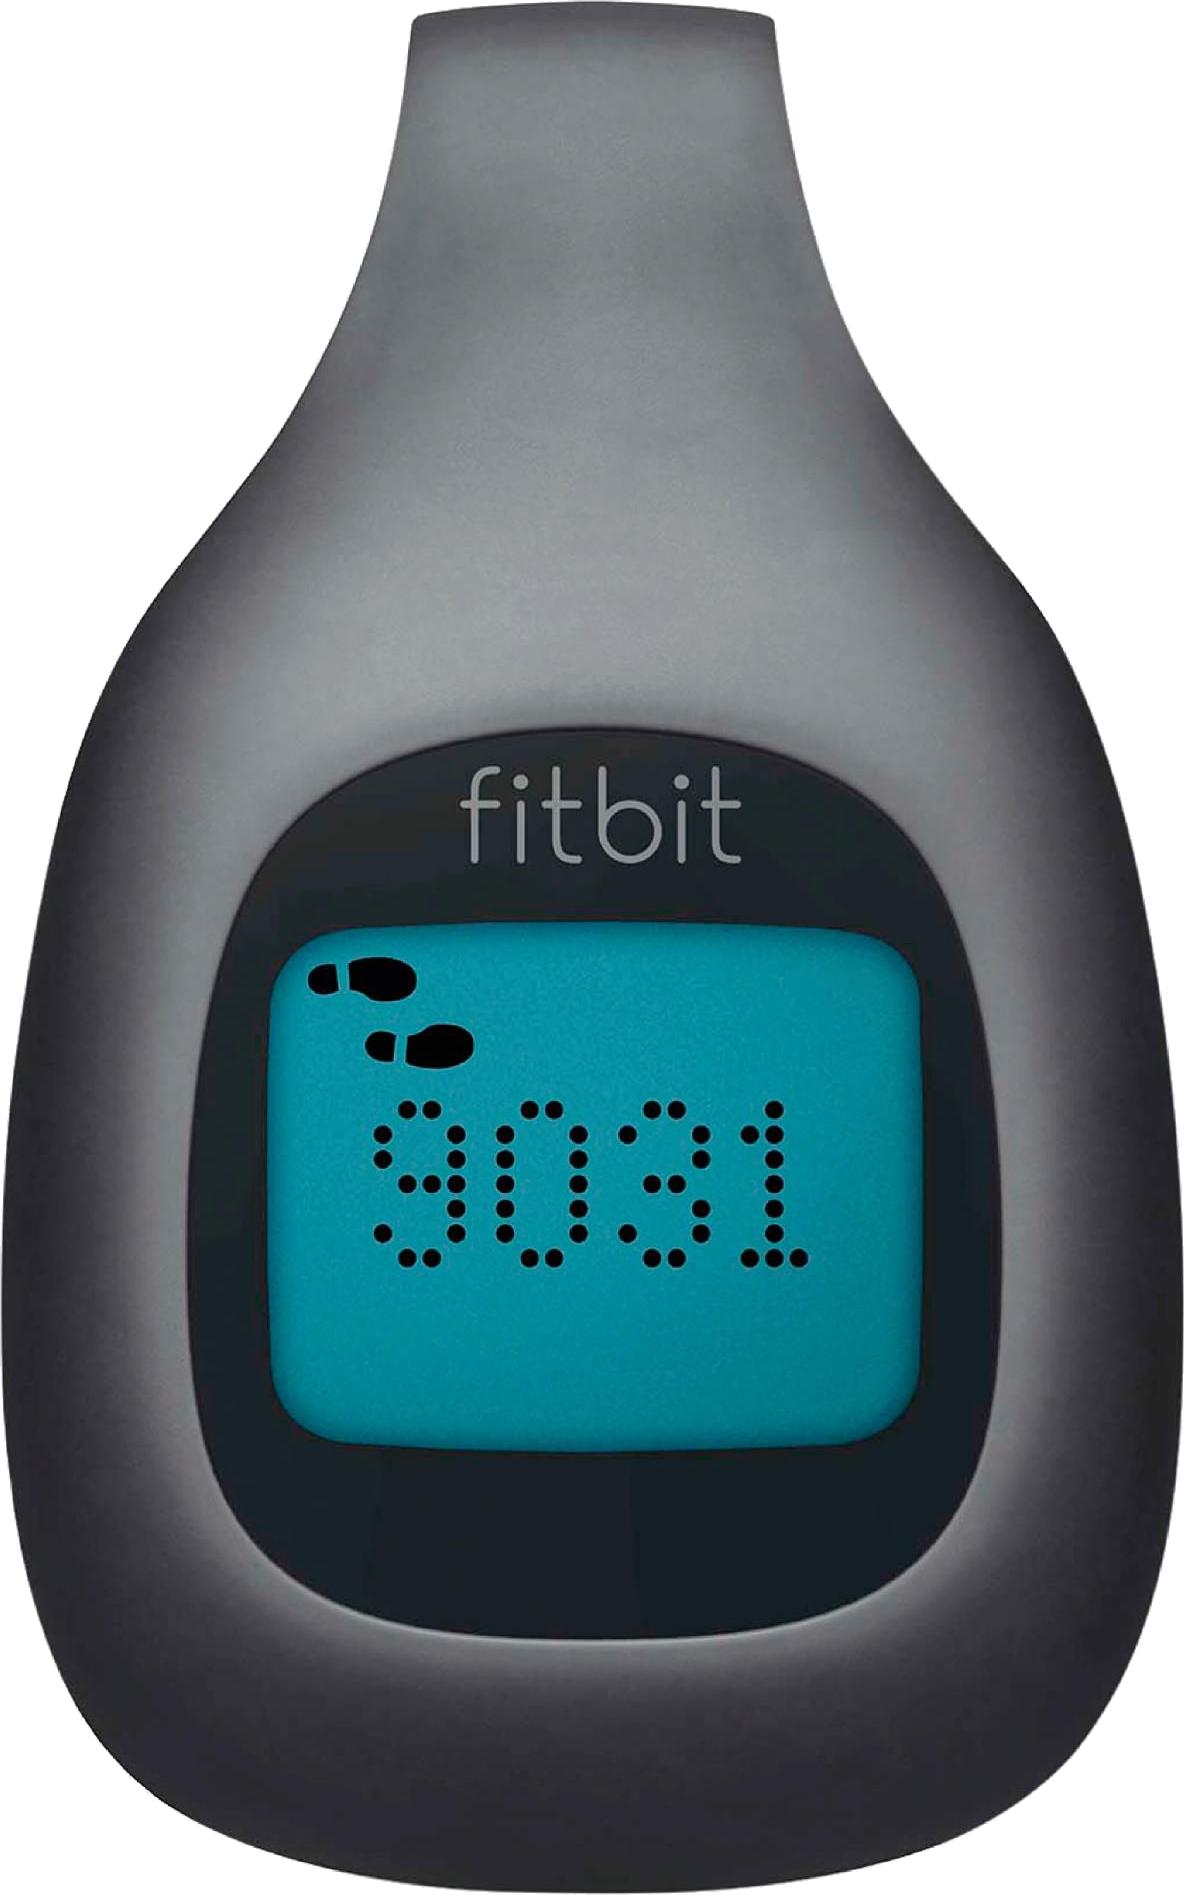 fitbit basic model